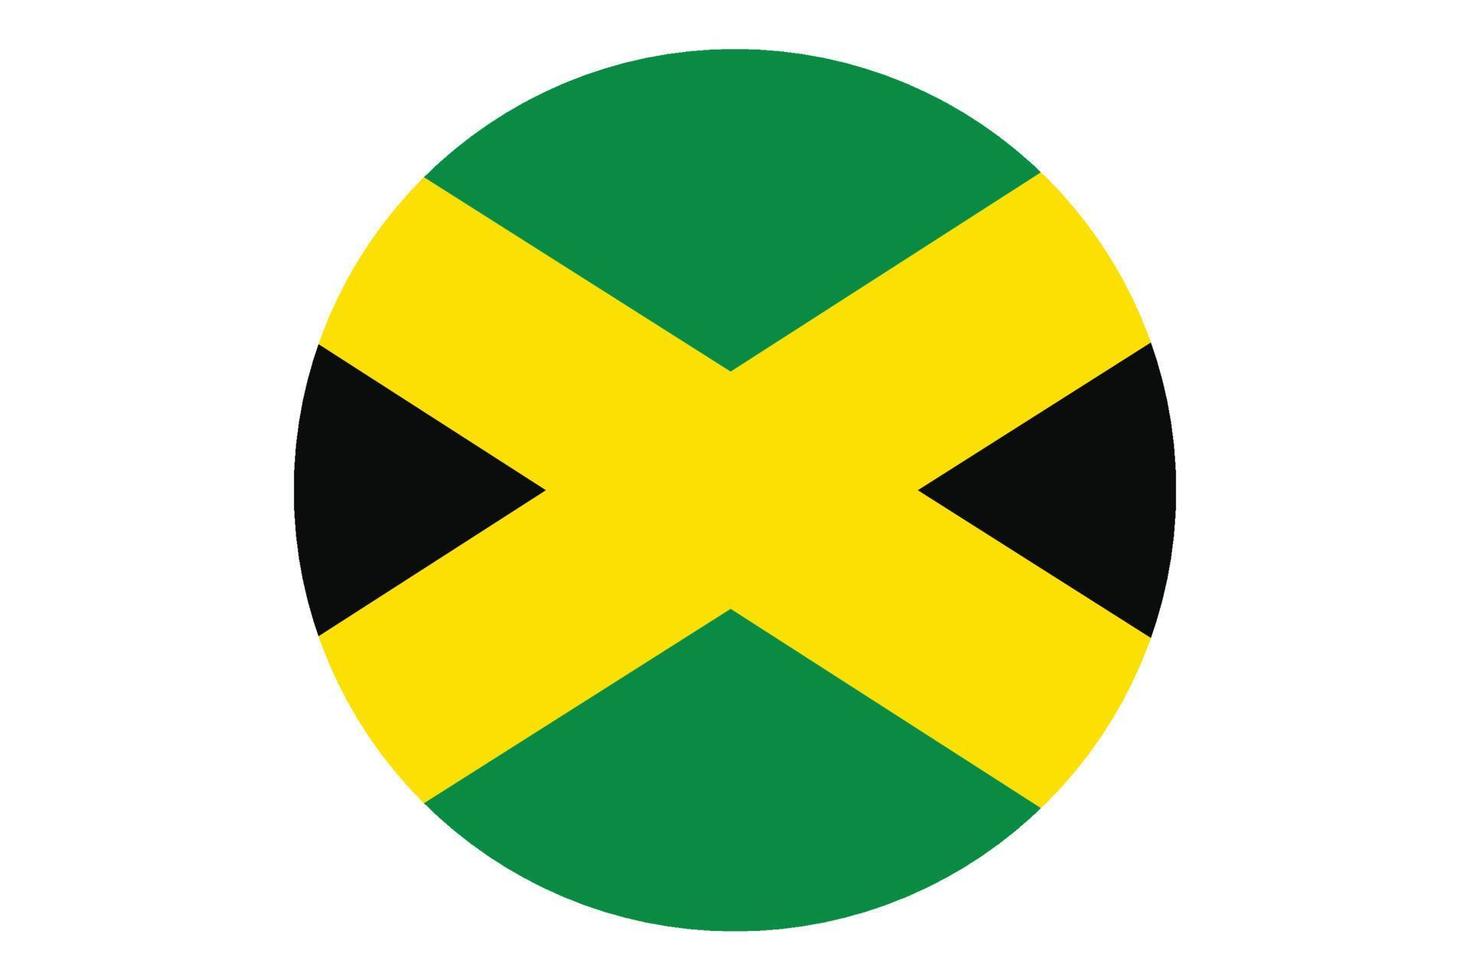 cirkel vlag vector van Jamaica